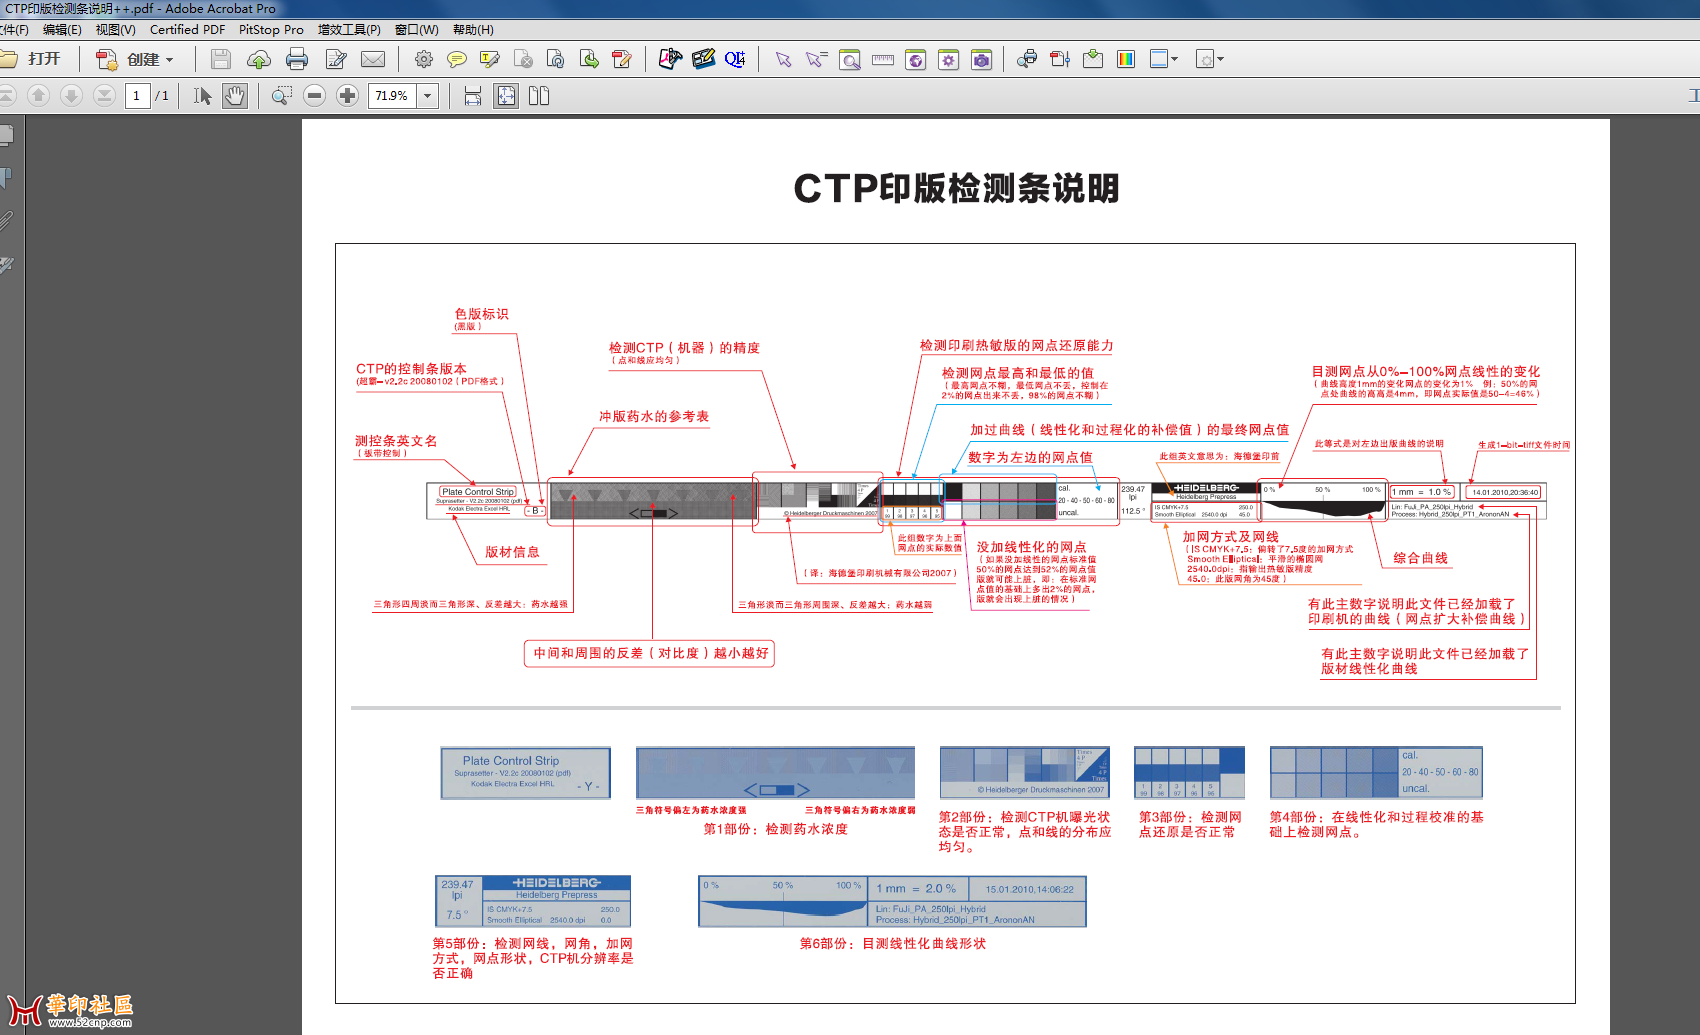 CTP印版检测条说明{tag}(1)